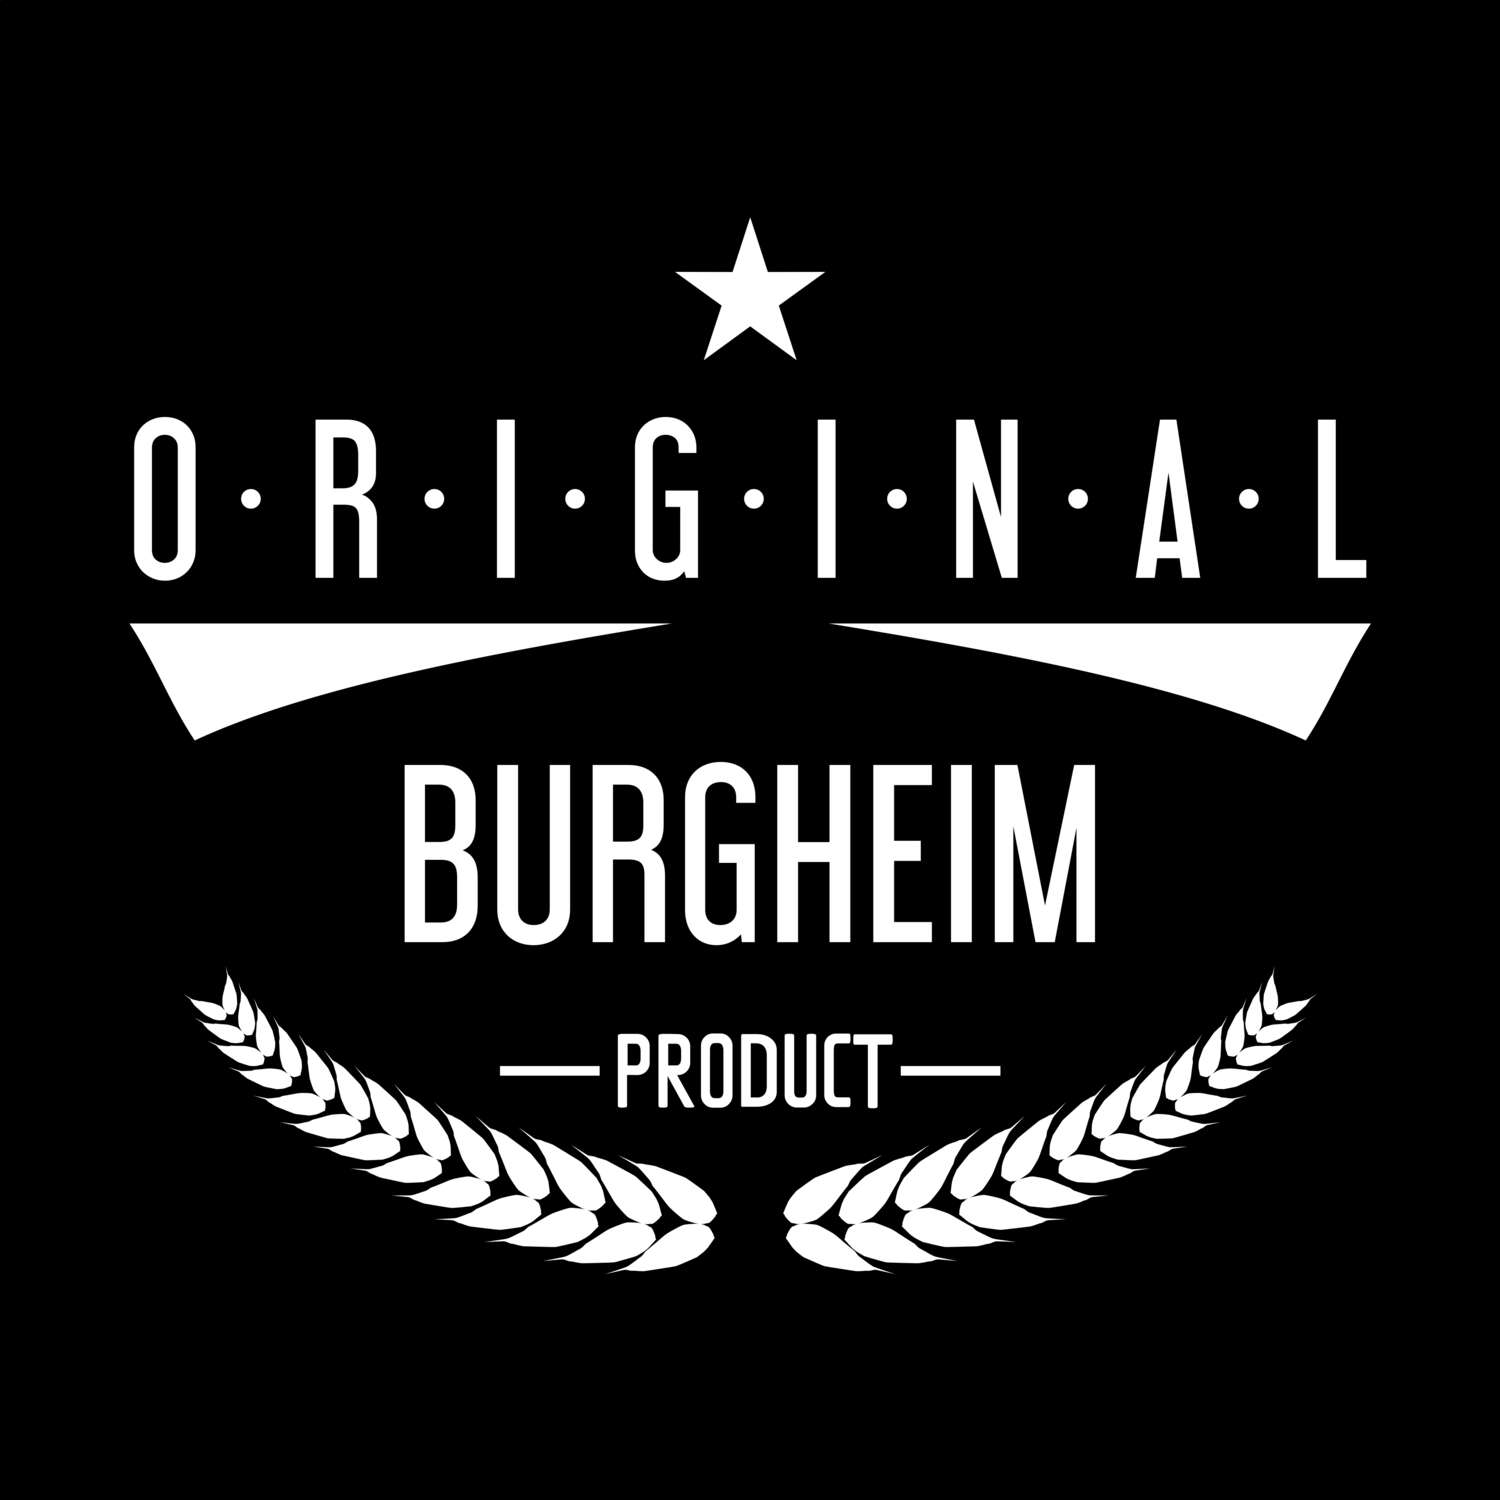 Burgheim T-Shirt »Original Product«